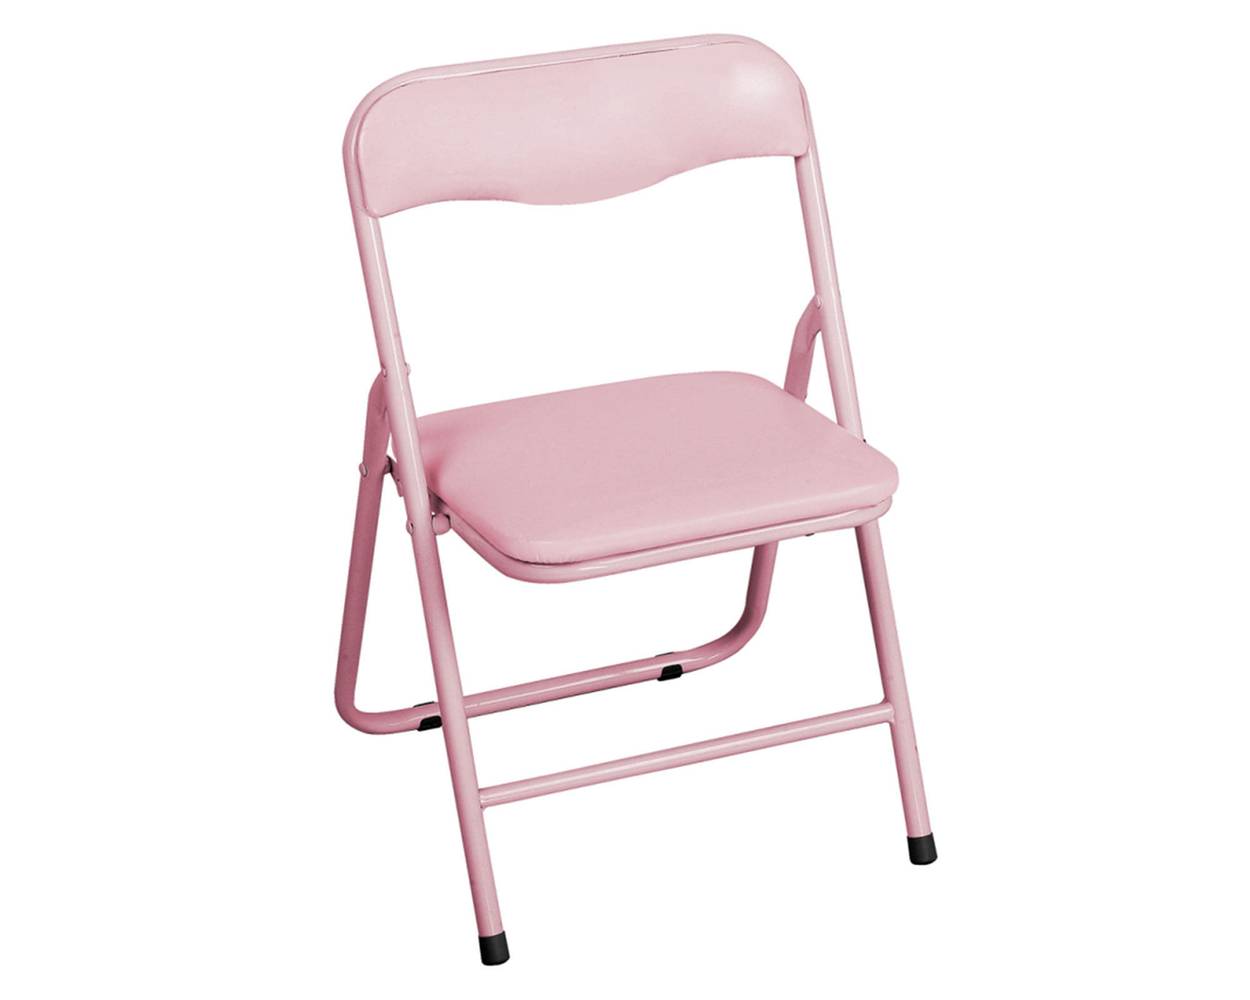 M+design silla plegable infantil 2.0 rosada (1 u)